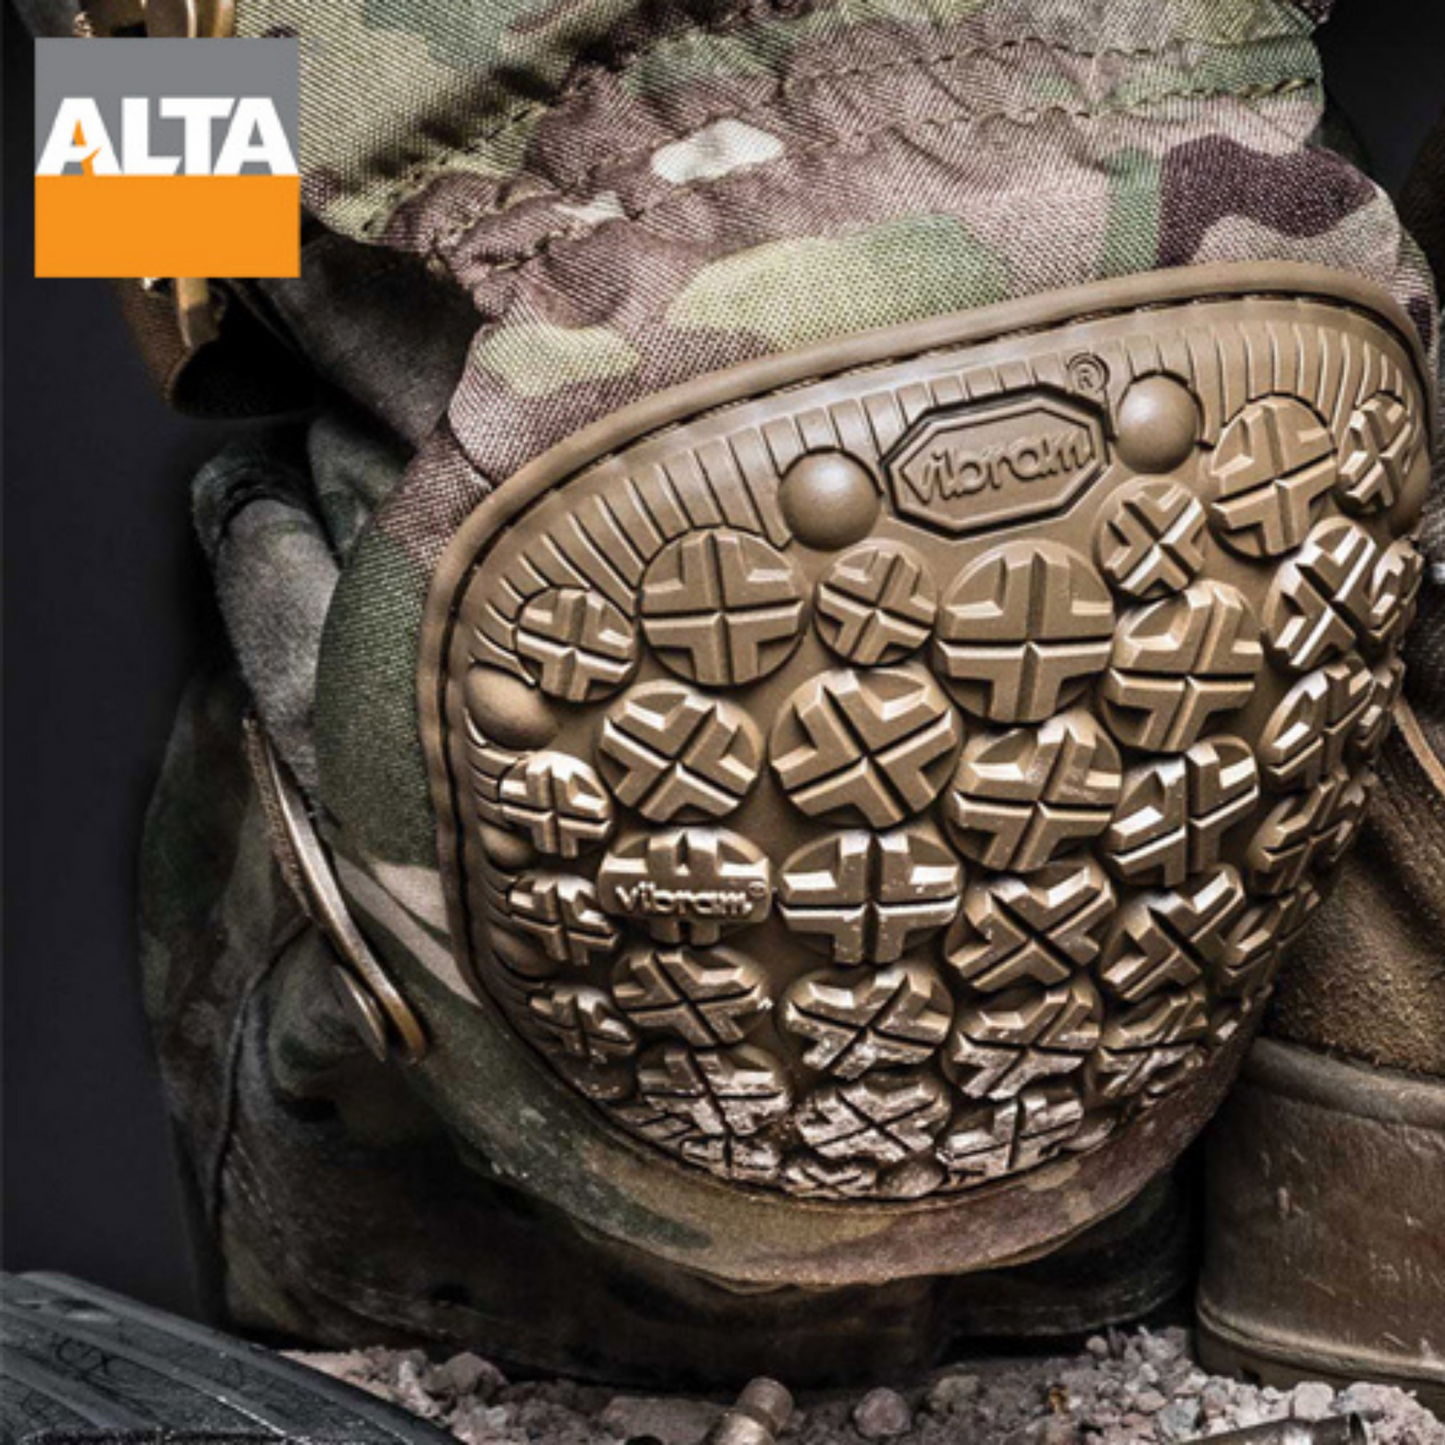 AltaFLEX-360™ 戰術護膝 - 強力抓地、耐用保護